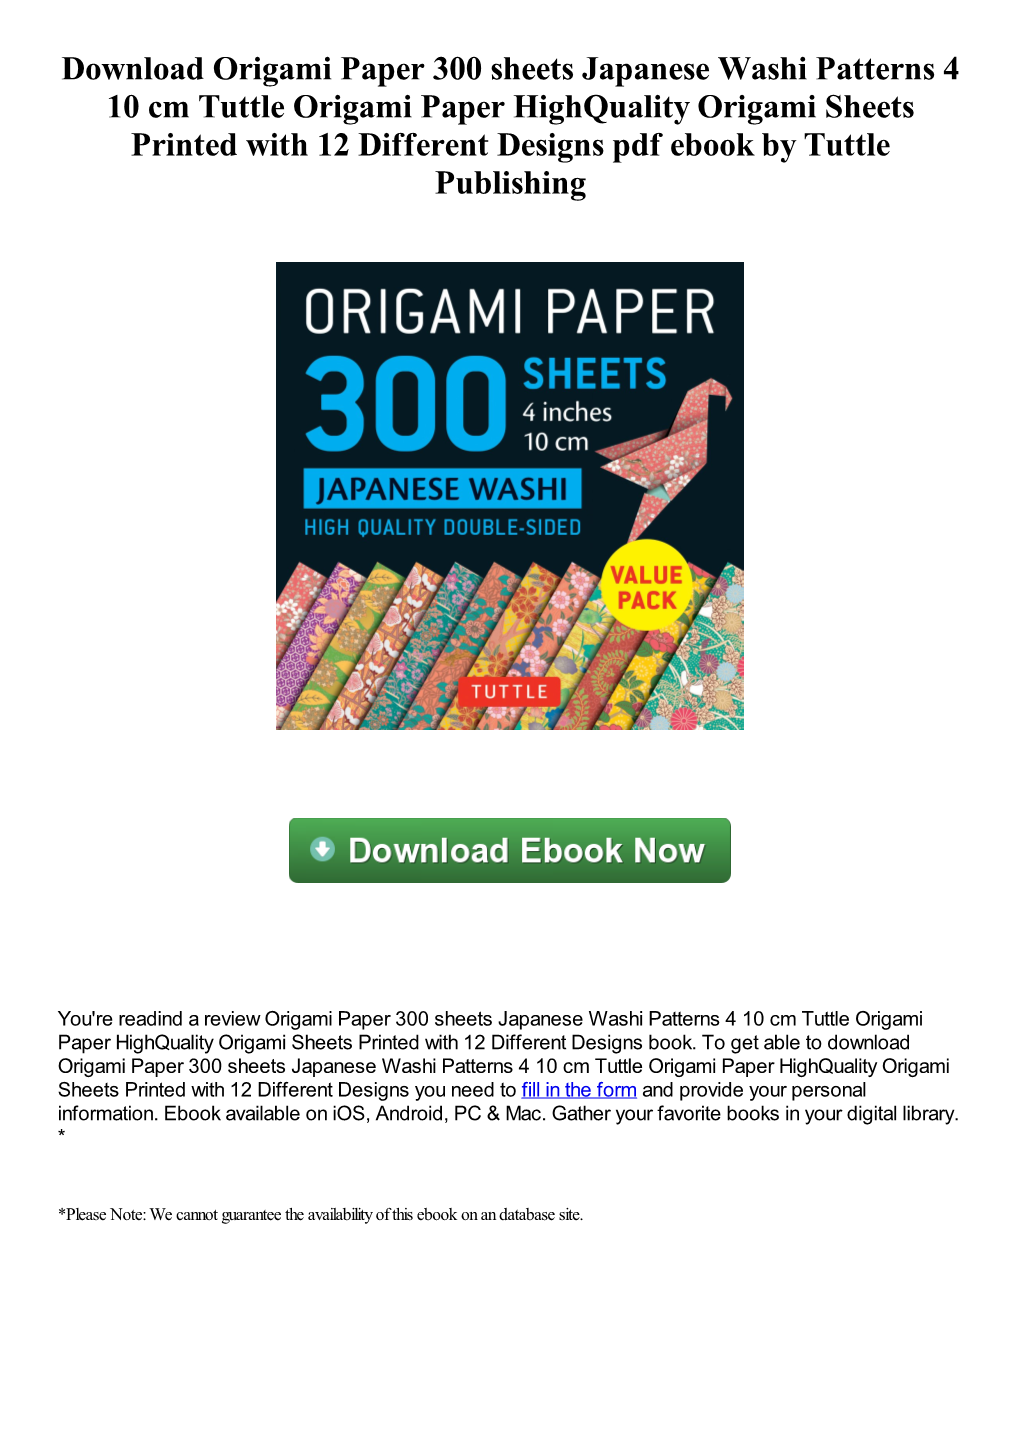 Download Origami Paper 300 Sheets Japanese Washi Patterns 4 10